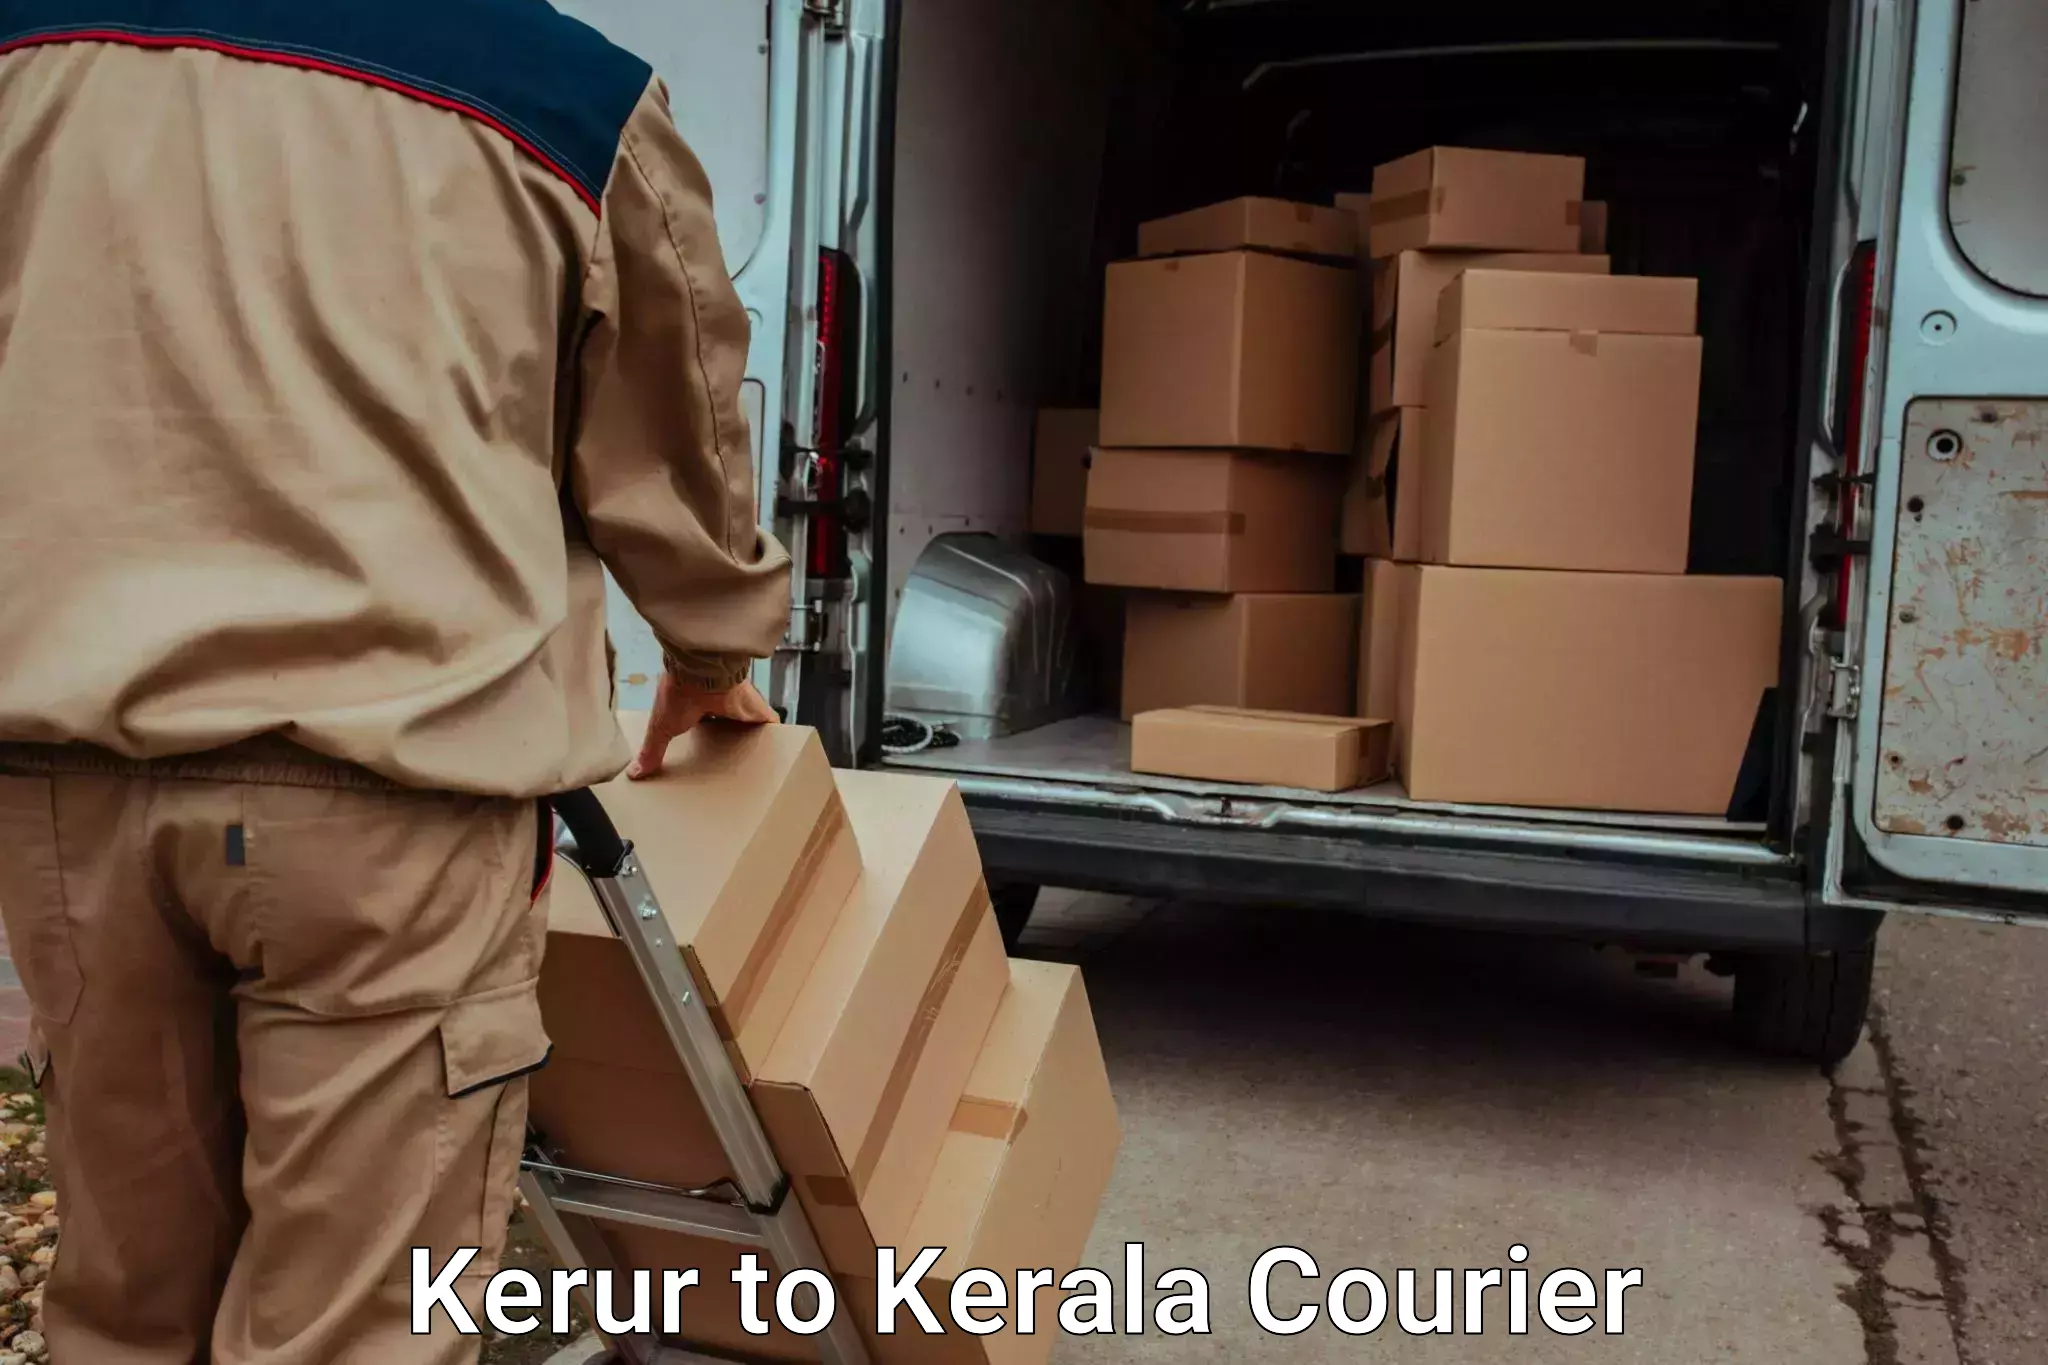 Luggage transport service Kerur to Cochin Port Kochi